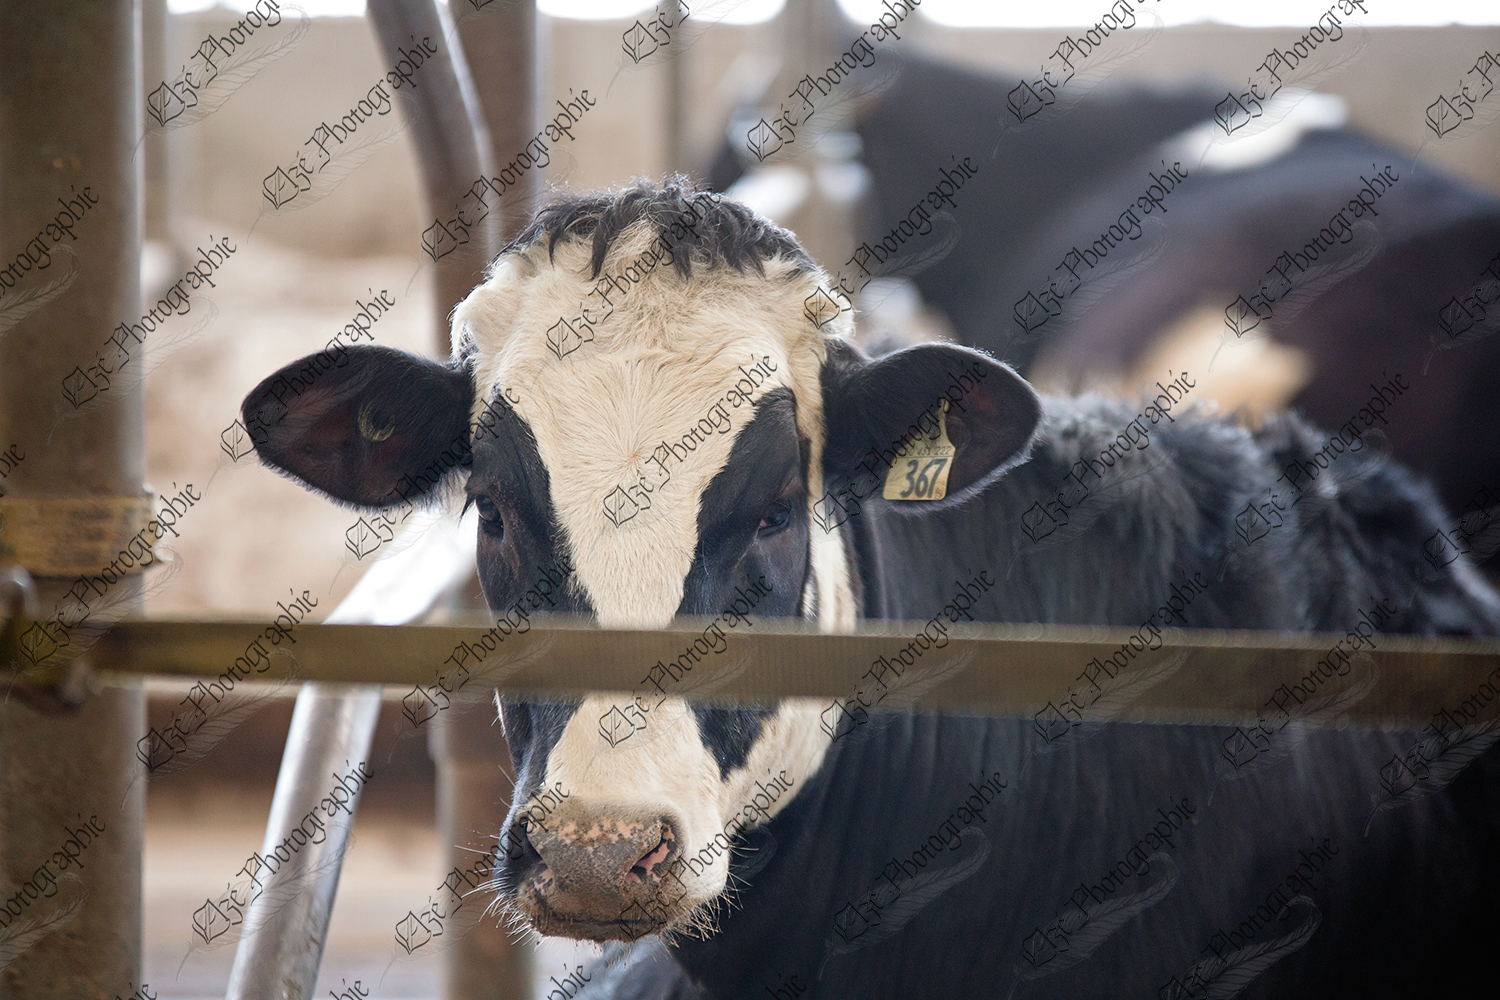 elze_photo_6026_vache_laitiere_holstein_dairy_cow_farm